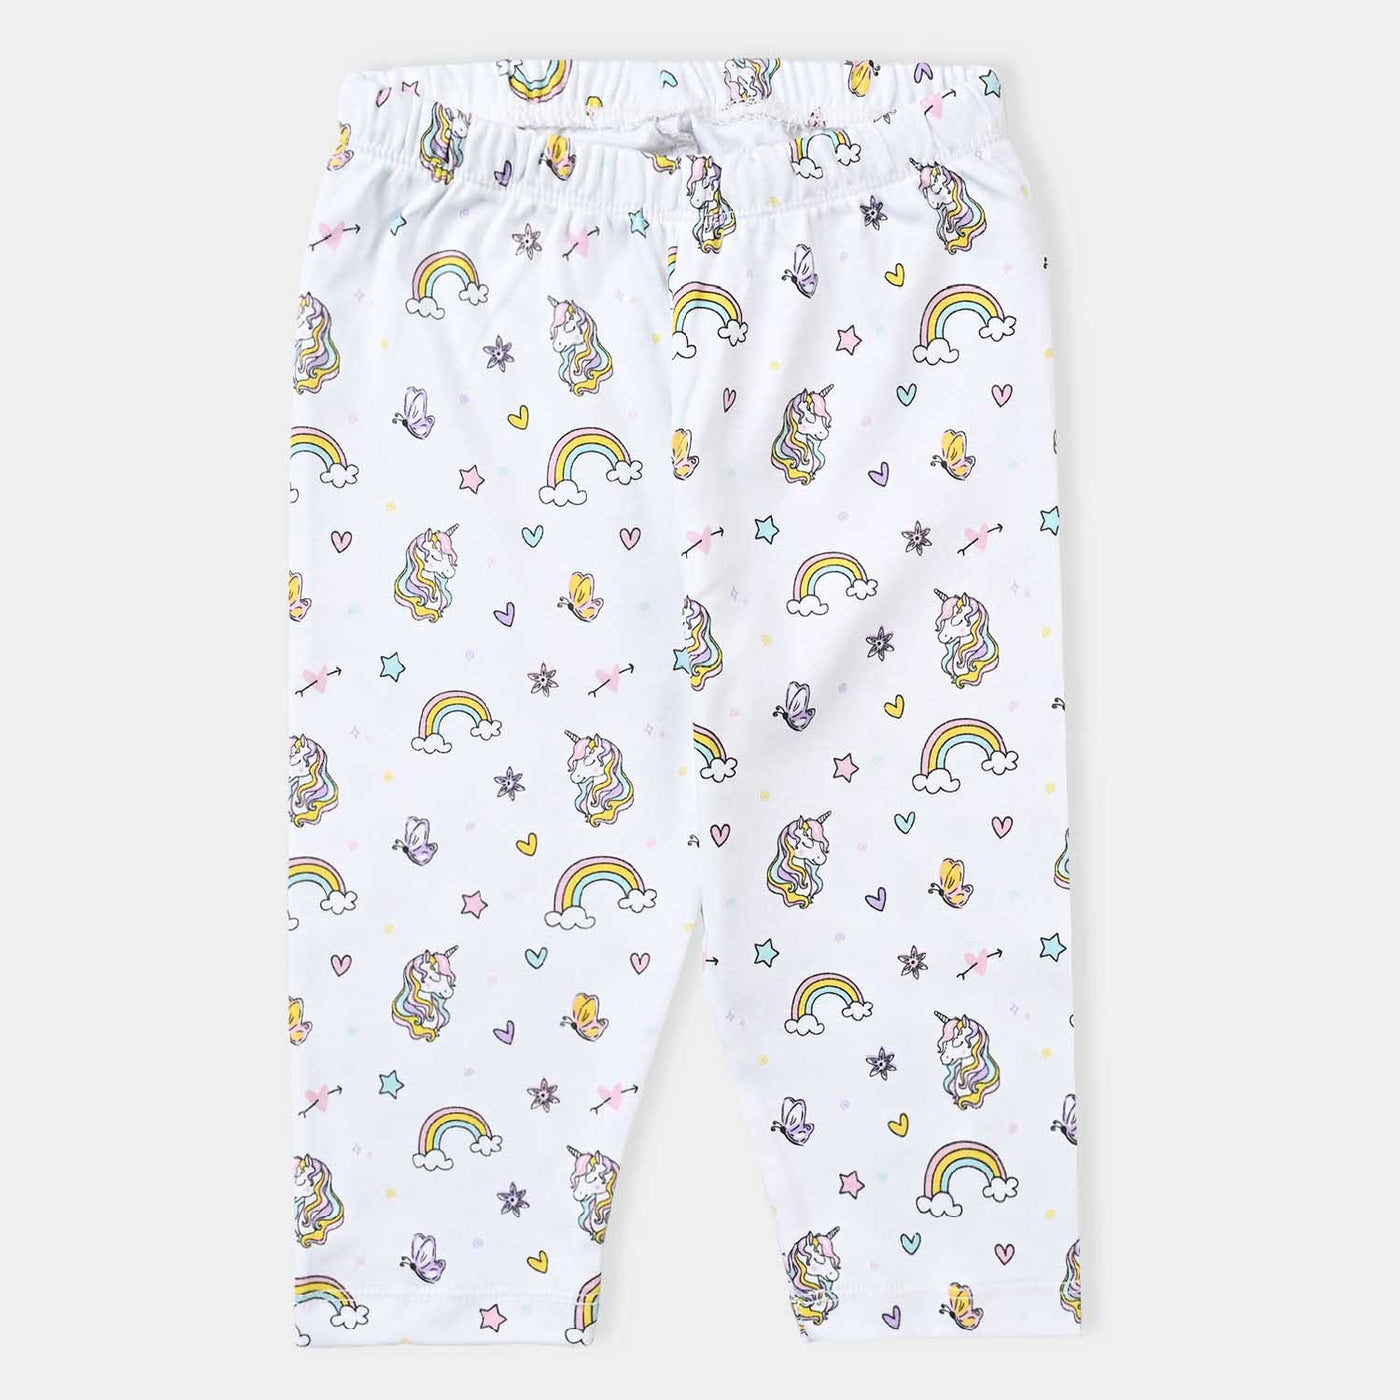 Infant Girls Cotton Interlock Pyjama Set